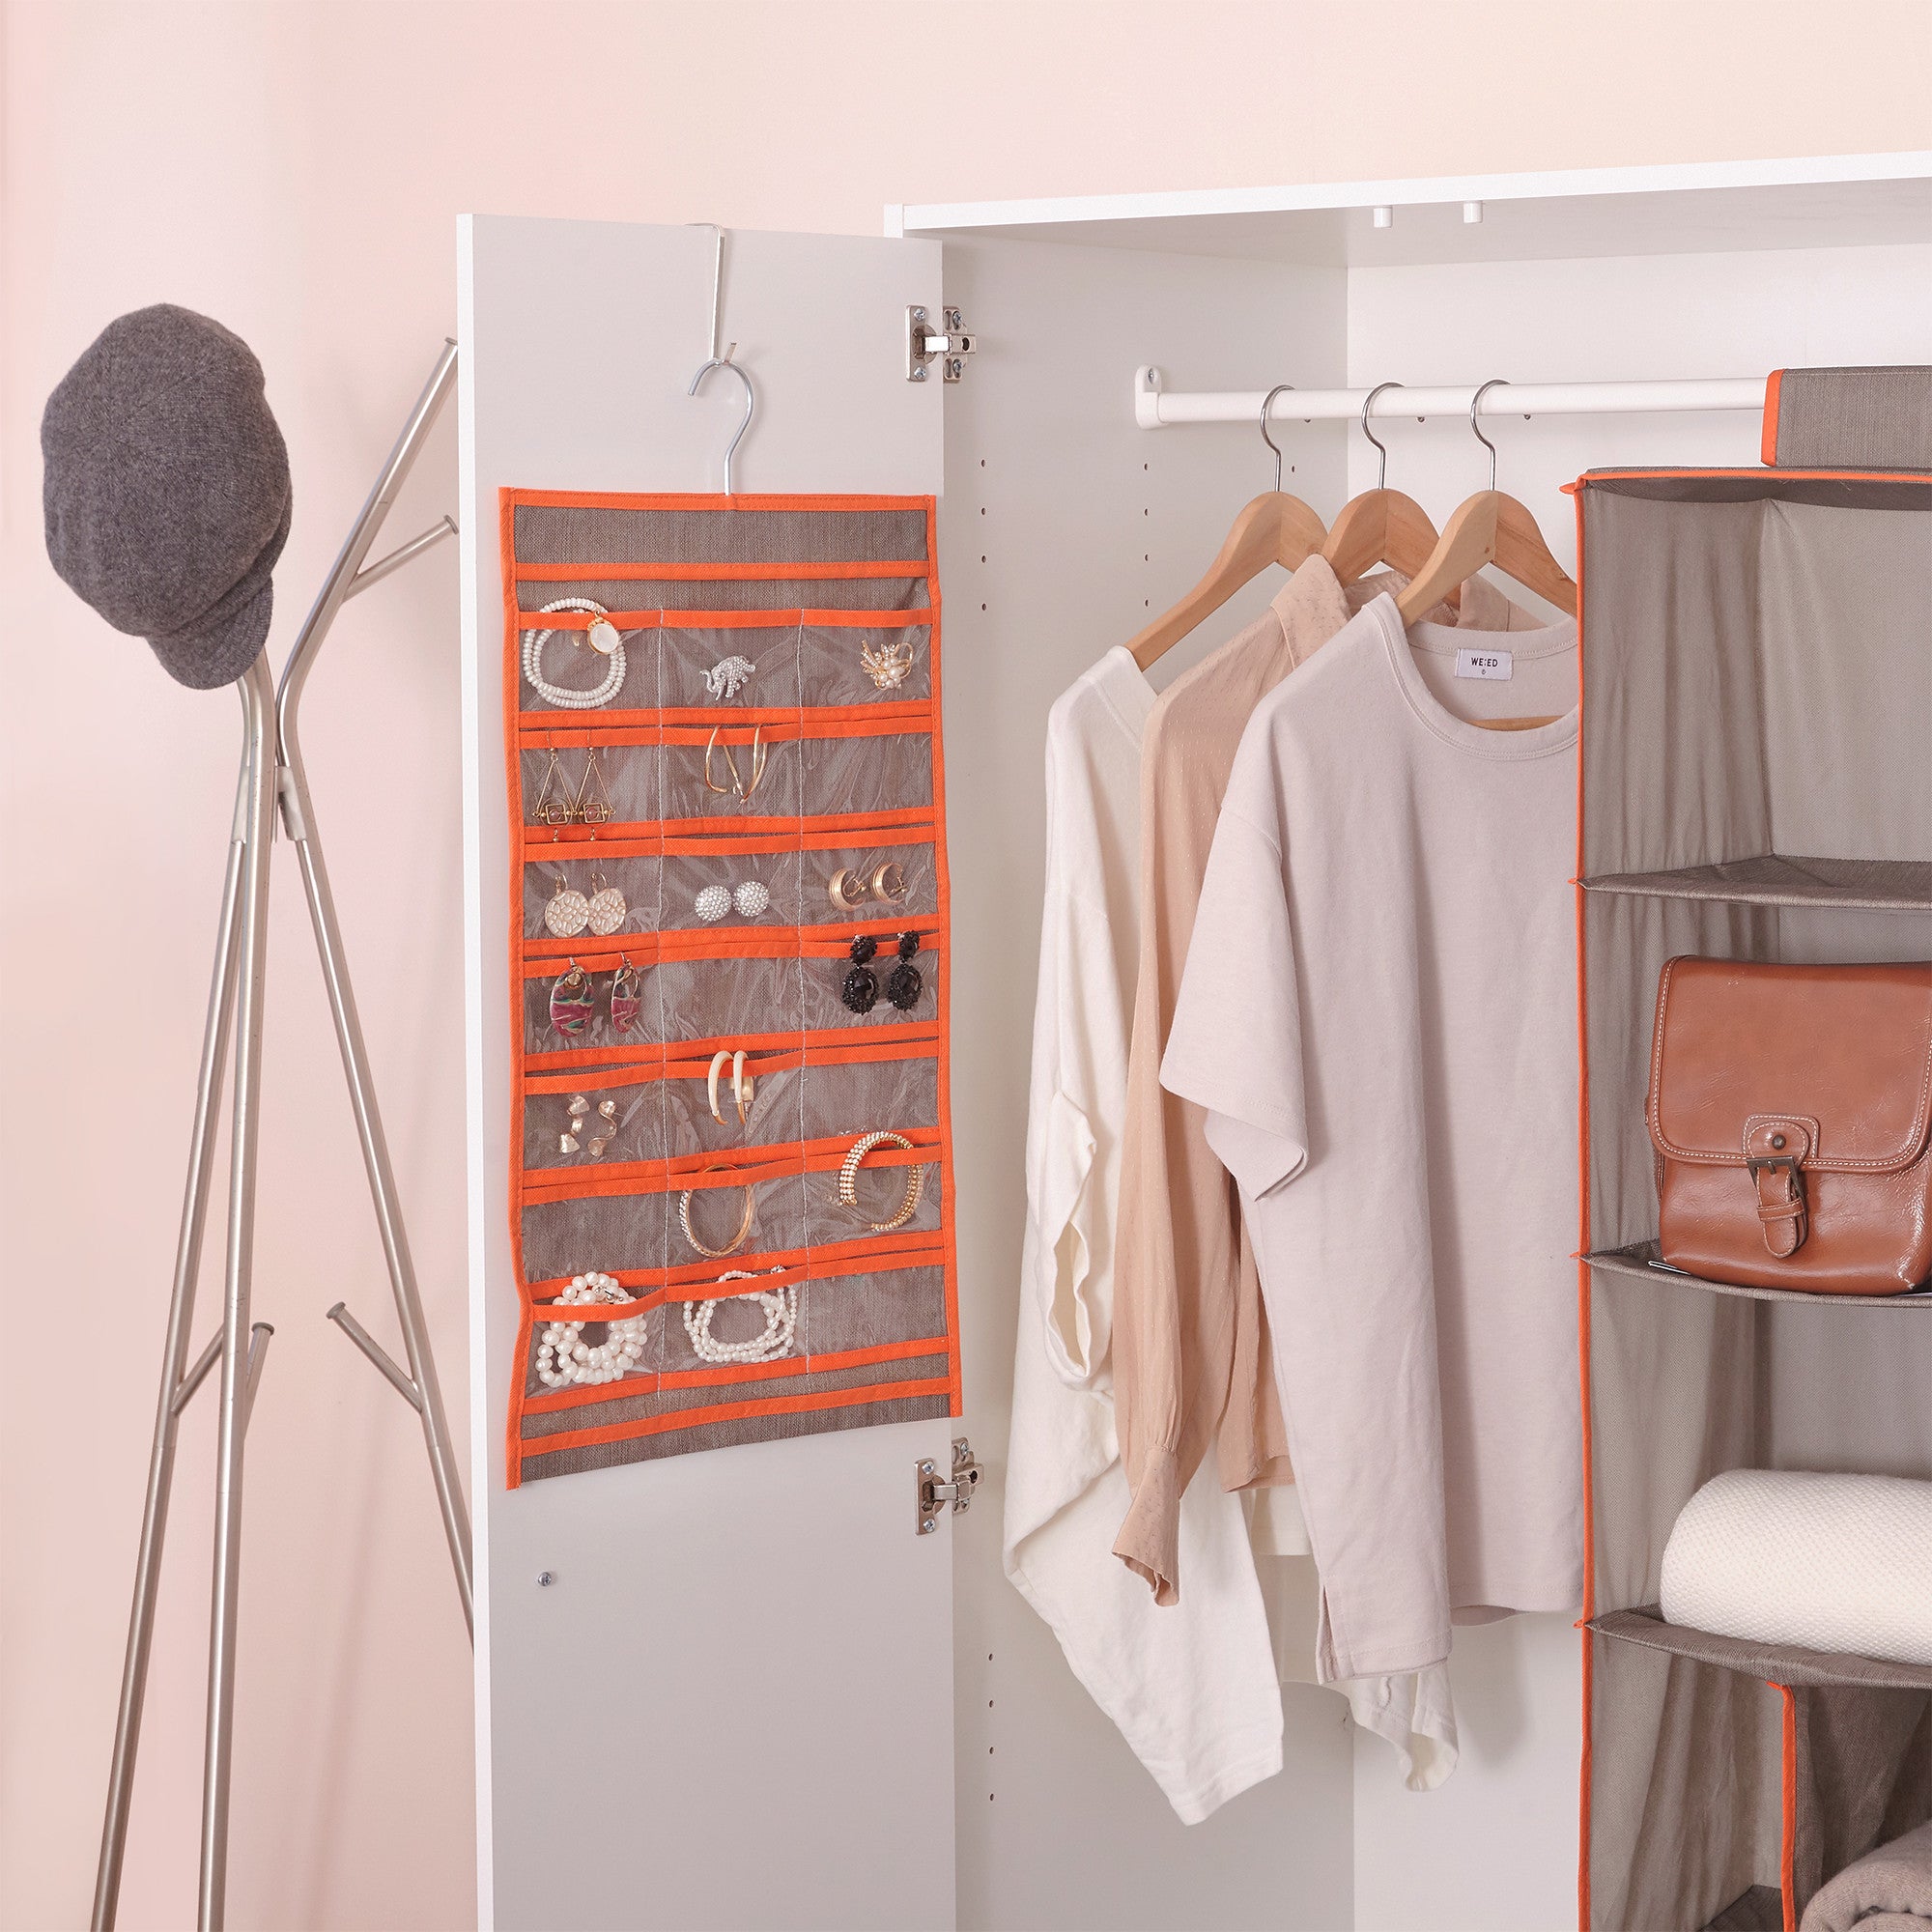 Soft Closet Storage - Hanging Closet Organizer